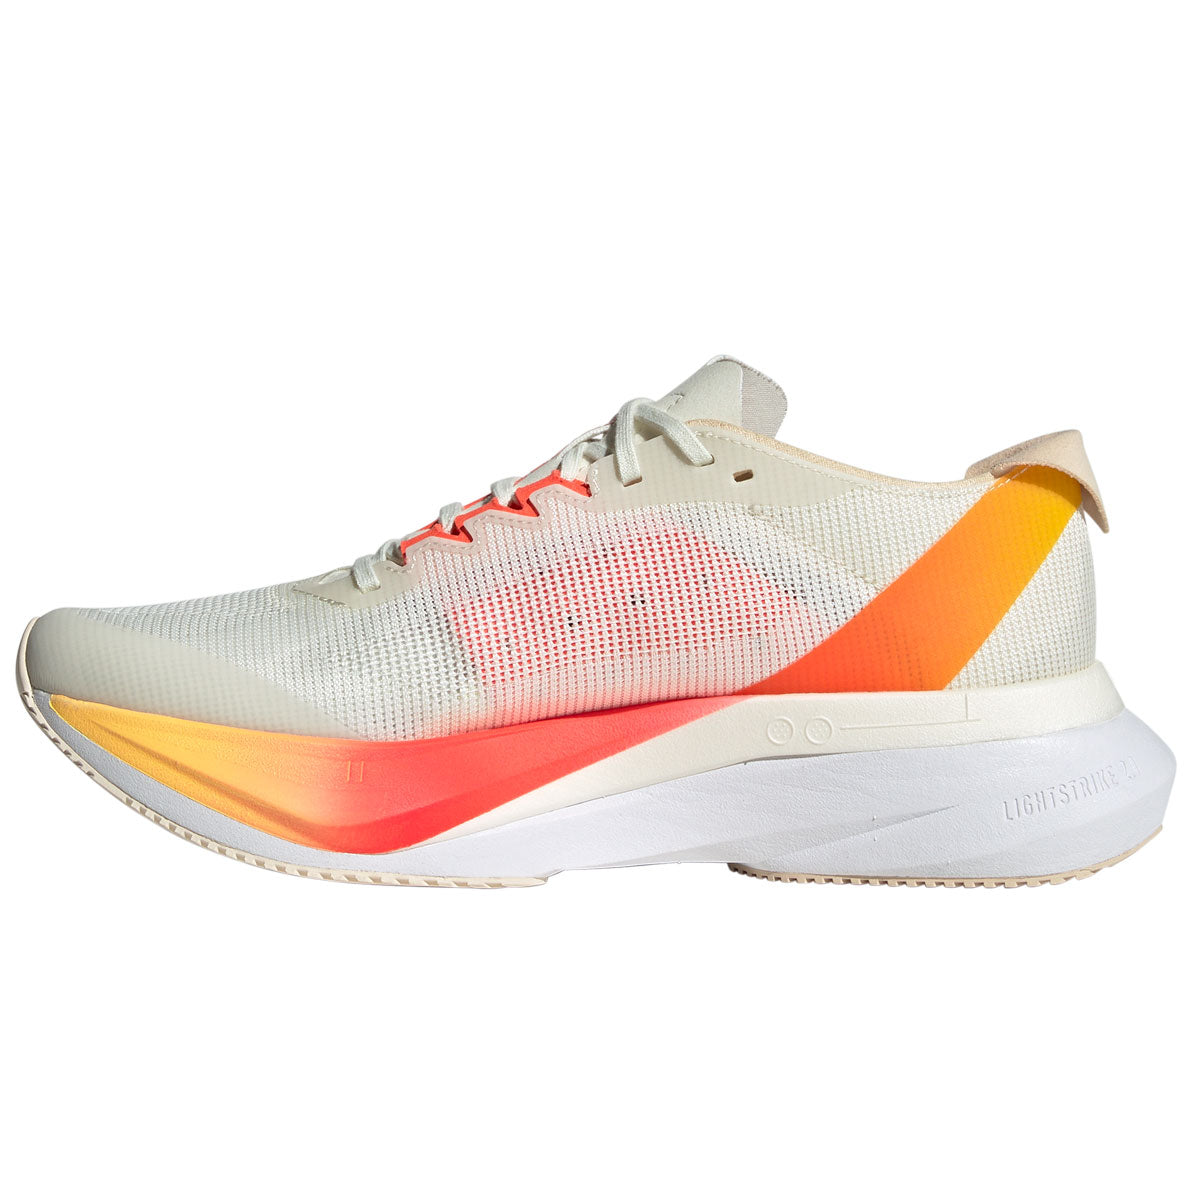 adidas Adizero Boston 12 Running Shoes - Womens - Grey/Orange/Black